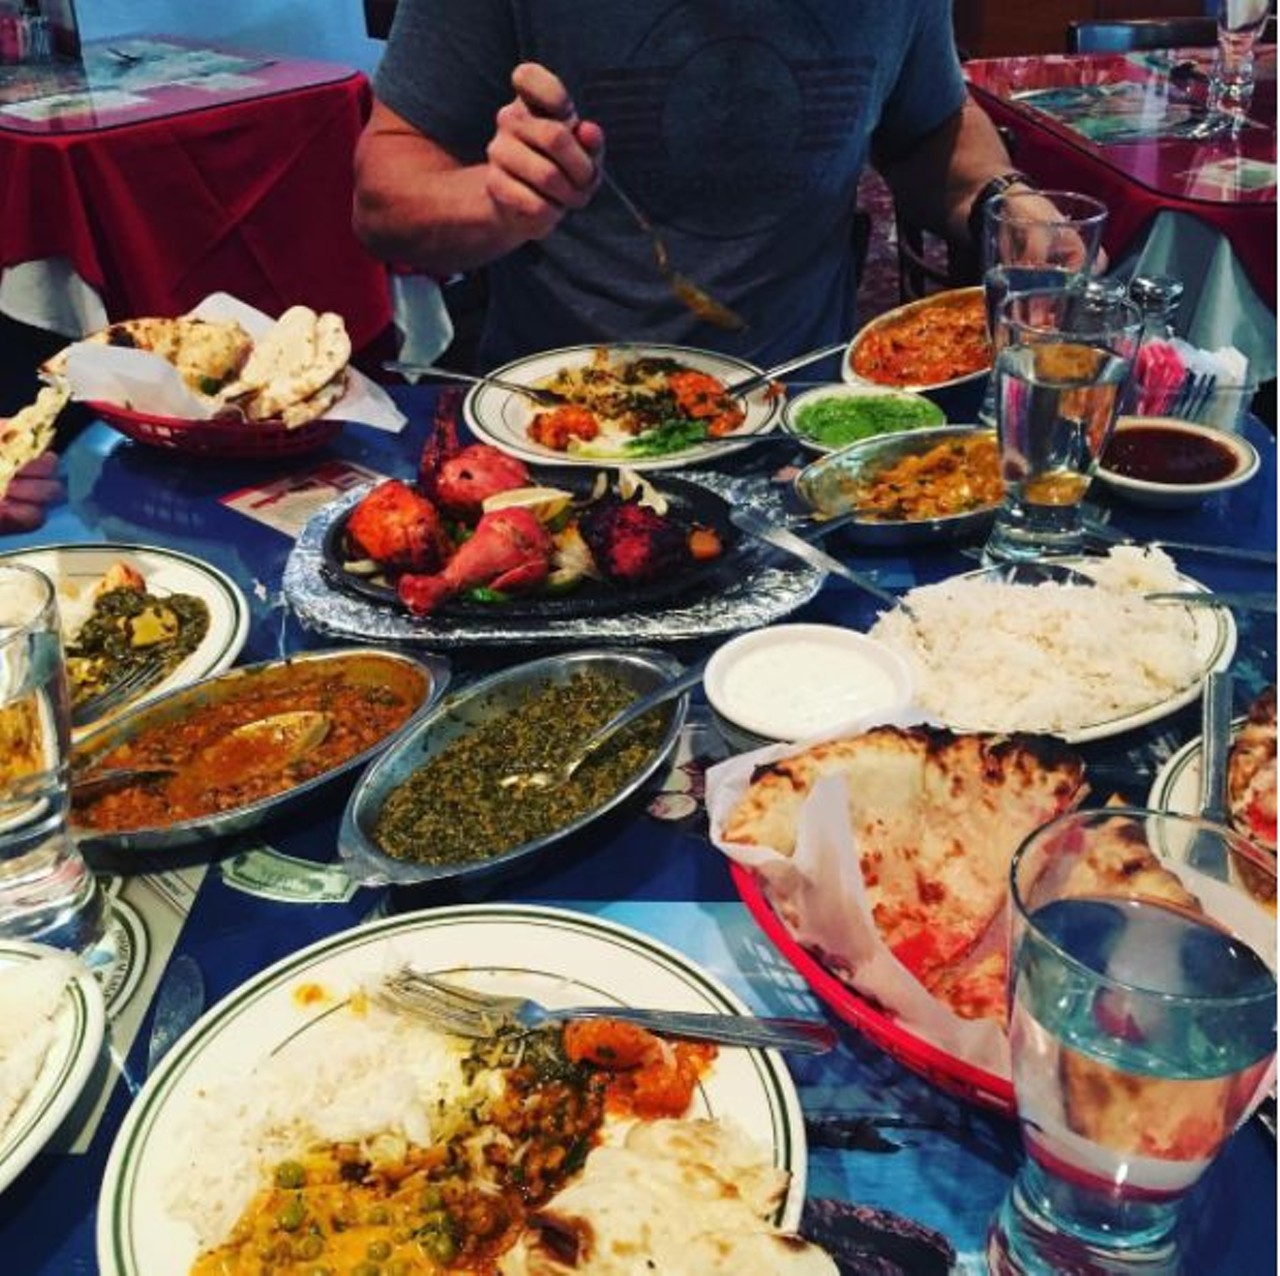 Best Indian Restaurant
India Palace, 8474 Fredericksburg Rd, (210) 692-5262
Photo via Instagram, mary_mosleyjensen